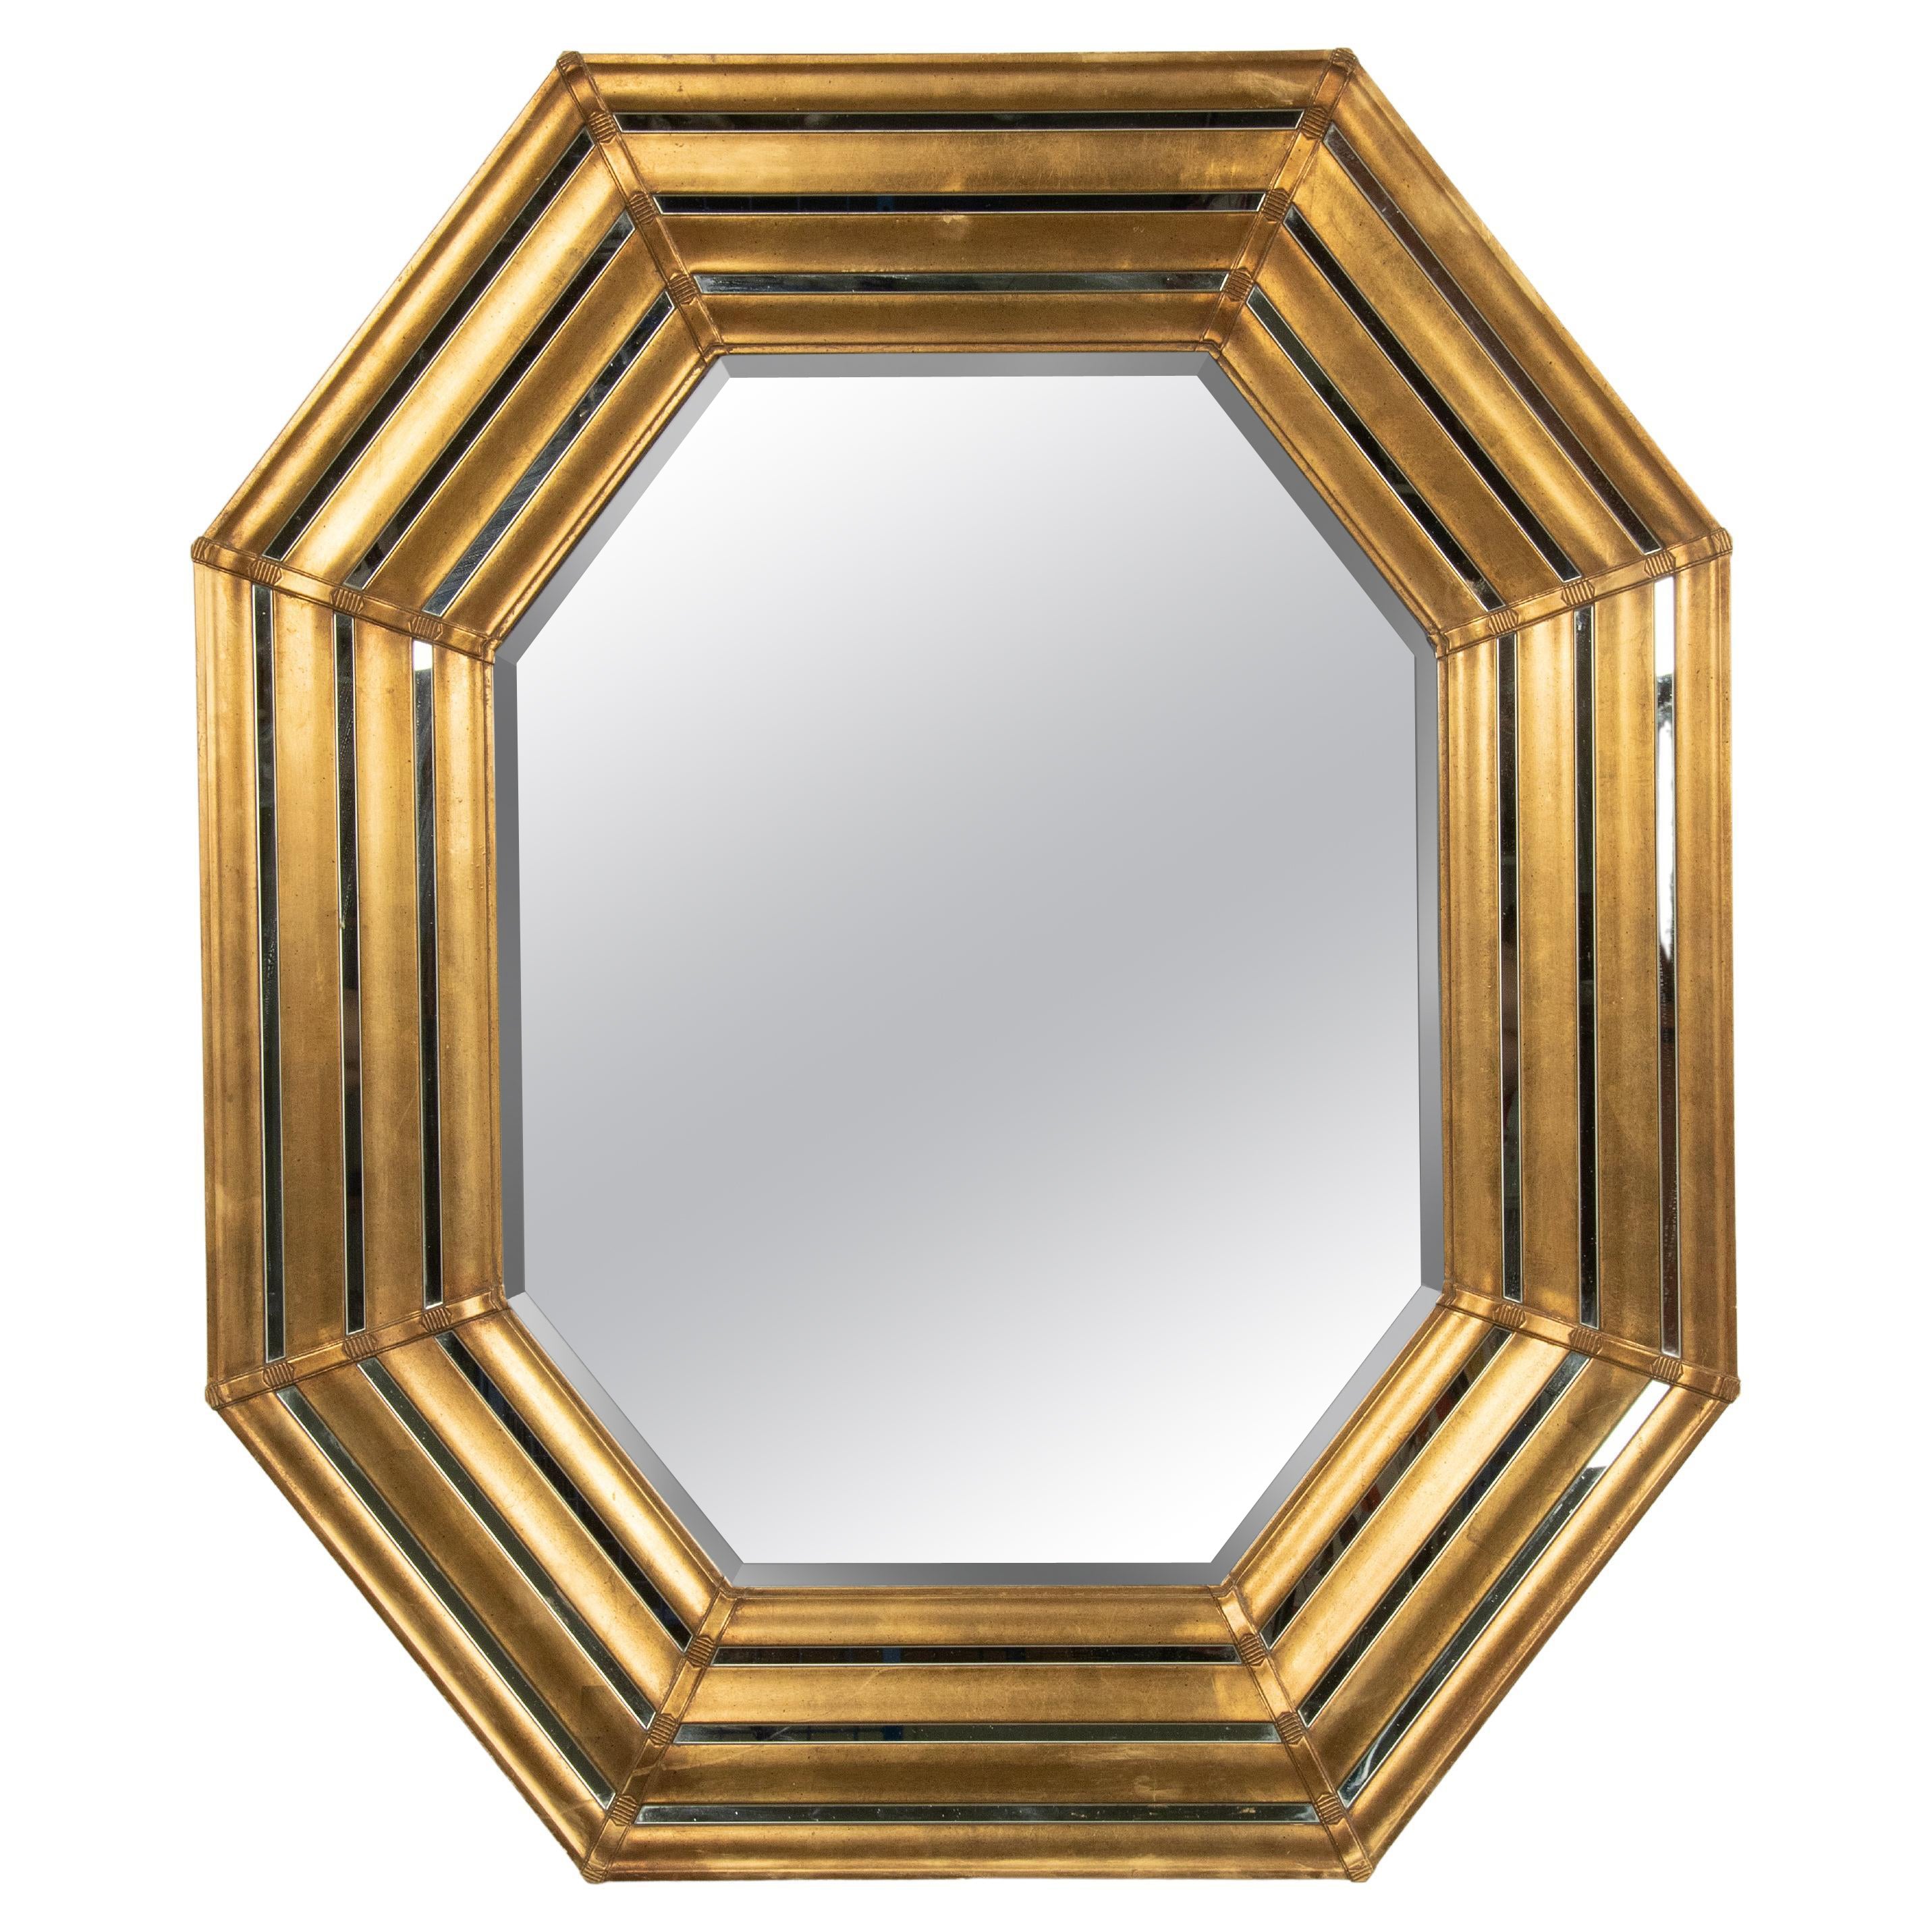 Miroir mural octogonal doré de style Hollywood Regency